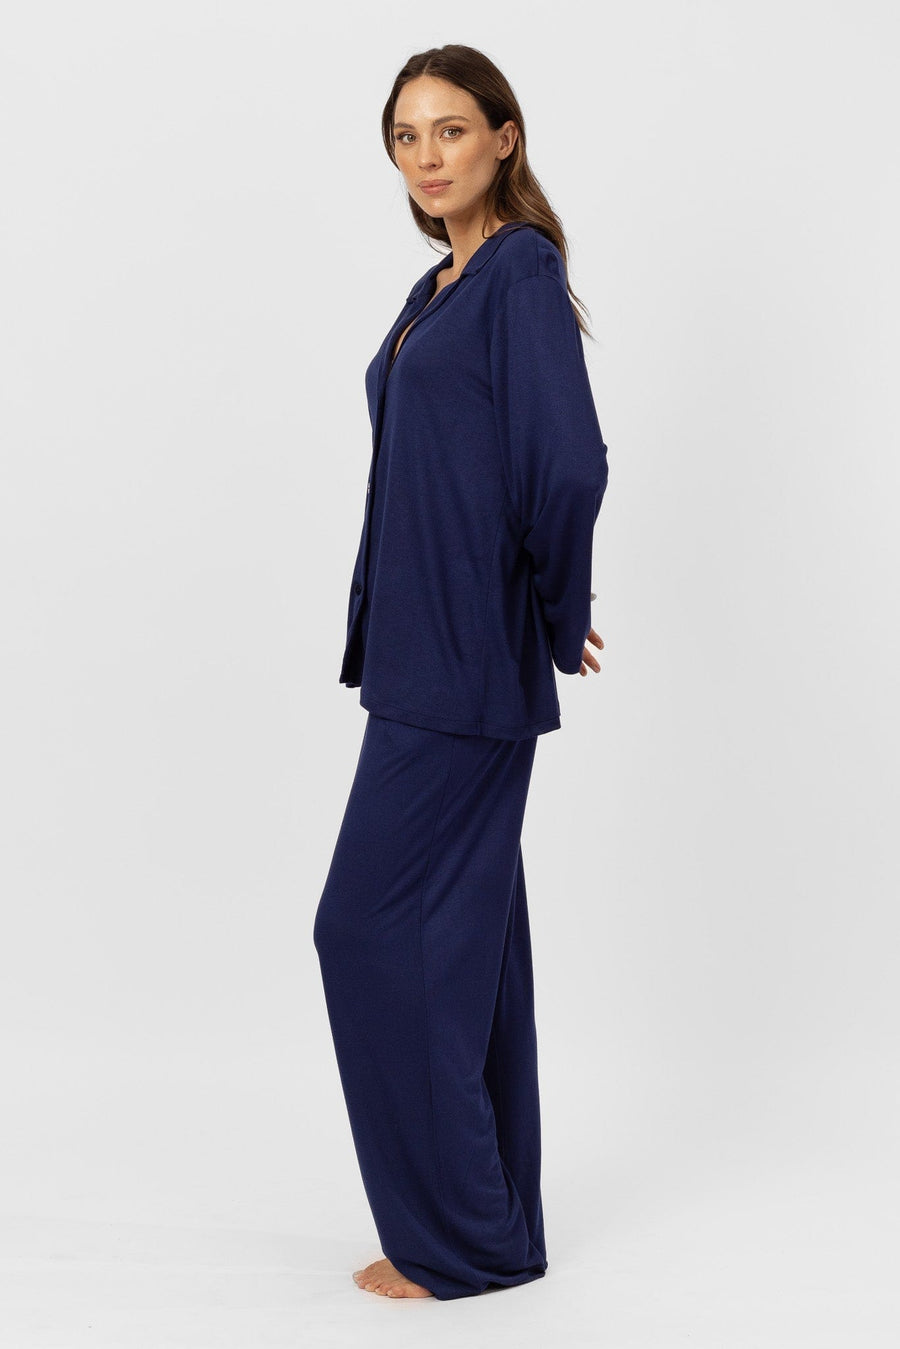 Epiphany Long Sleeve Top | Graphite Pyjama Tops Australia Online | Reverie the Label  TOPS Epiphany Long Sleeve Top